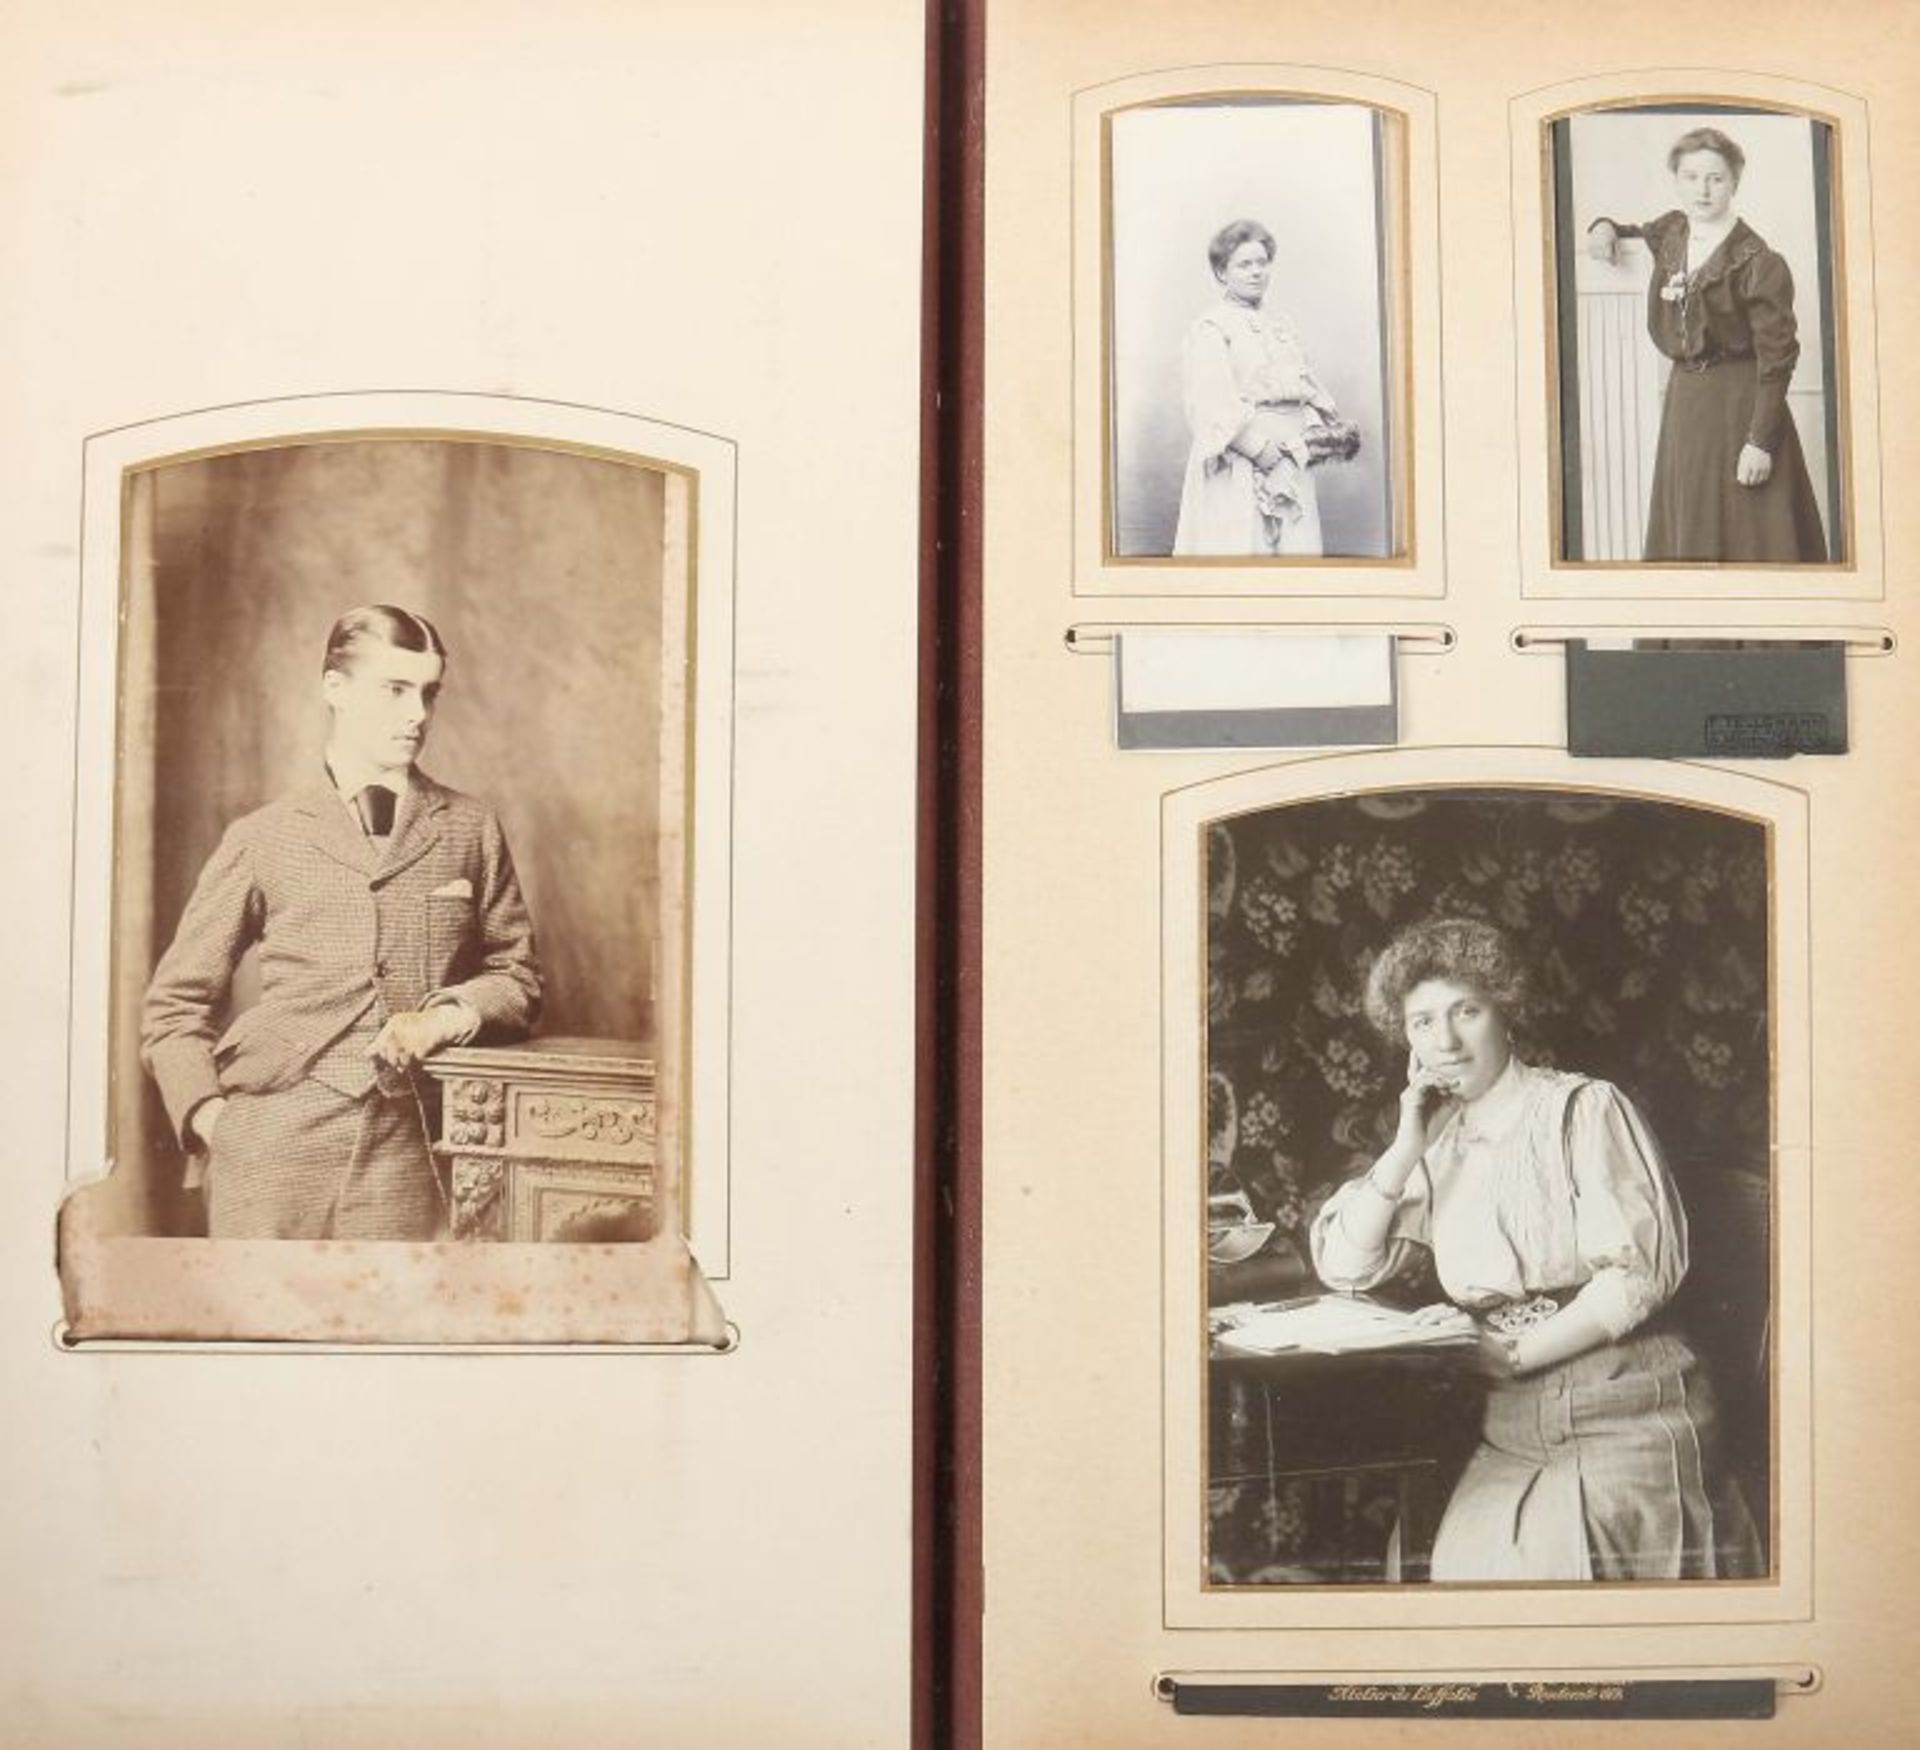 FamilienalbumDeutschland, um 1905, Album mit ca. 57 s/w-Fotografien, in lederbezogenem - Bild 5 aus 5